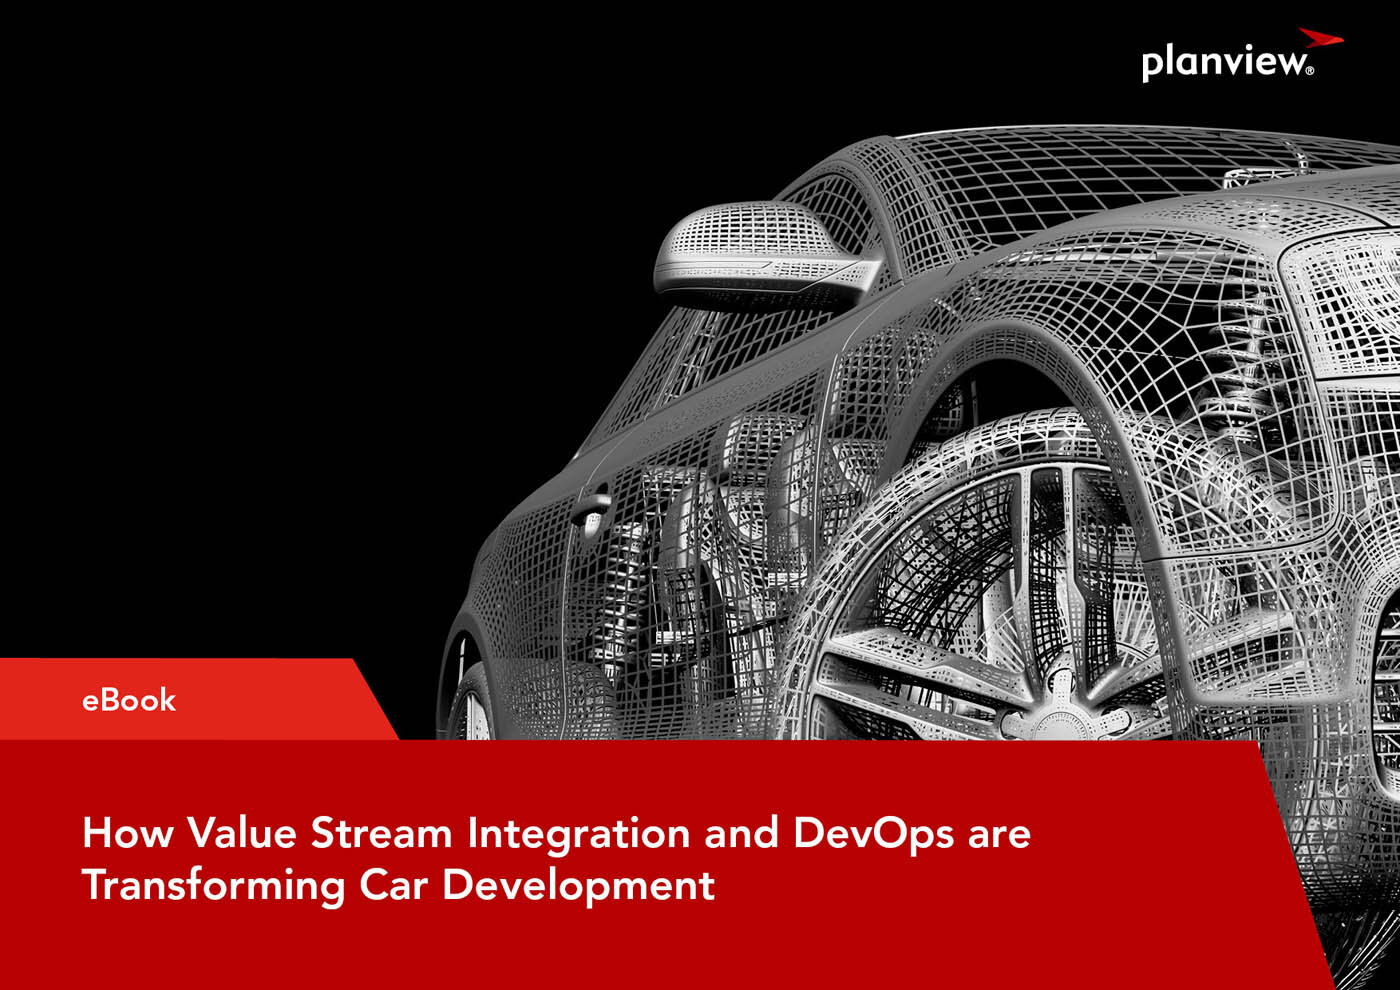 How Value Stream Integration and DevOps are Transforming Car Development